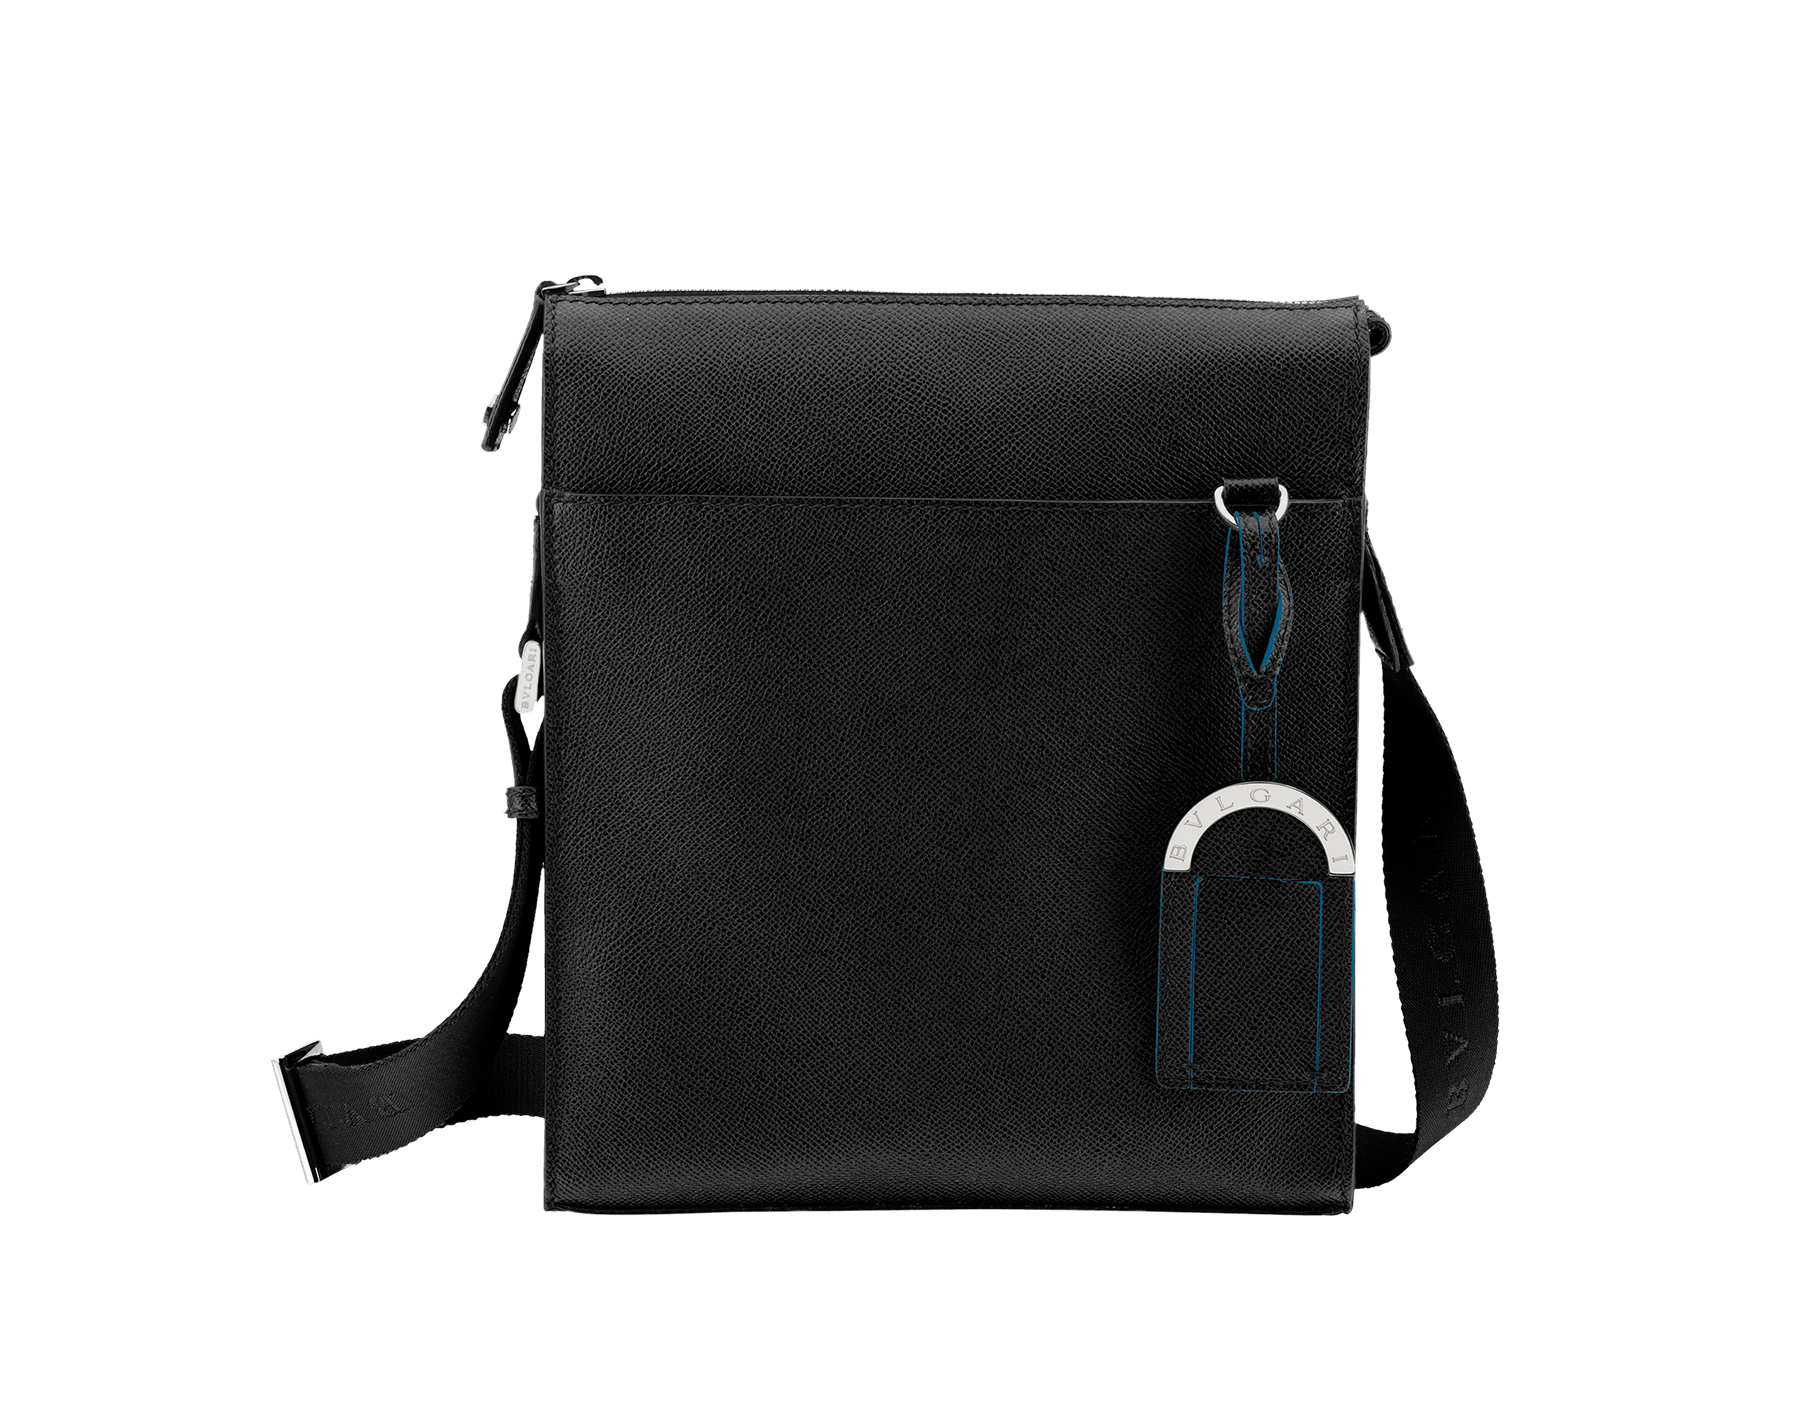 bvlgari black leather bag